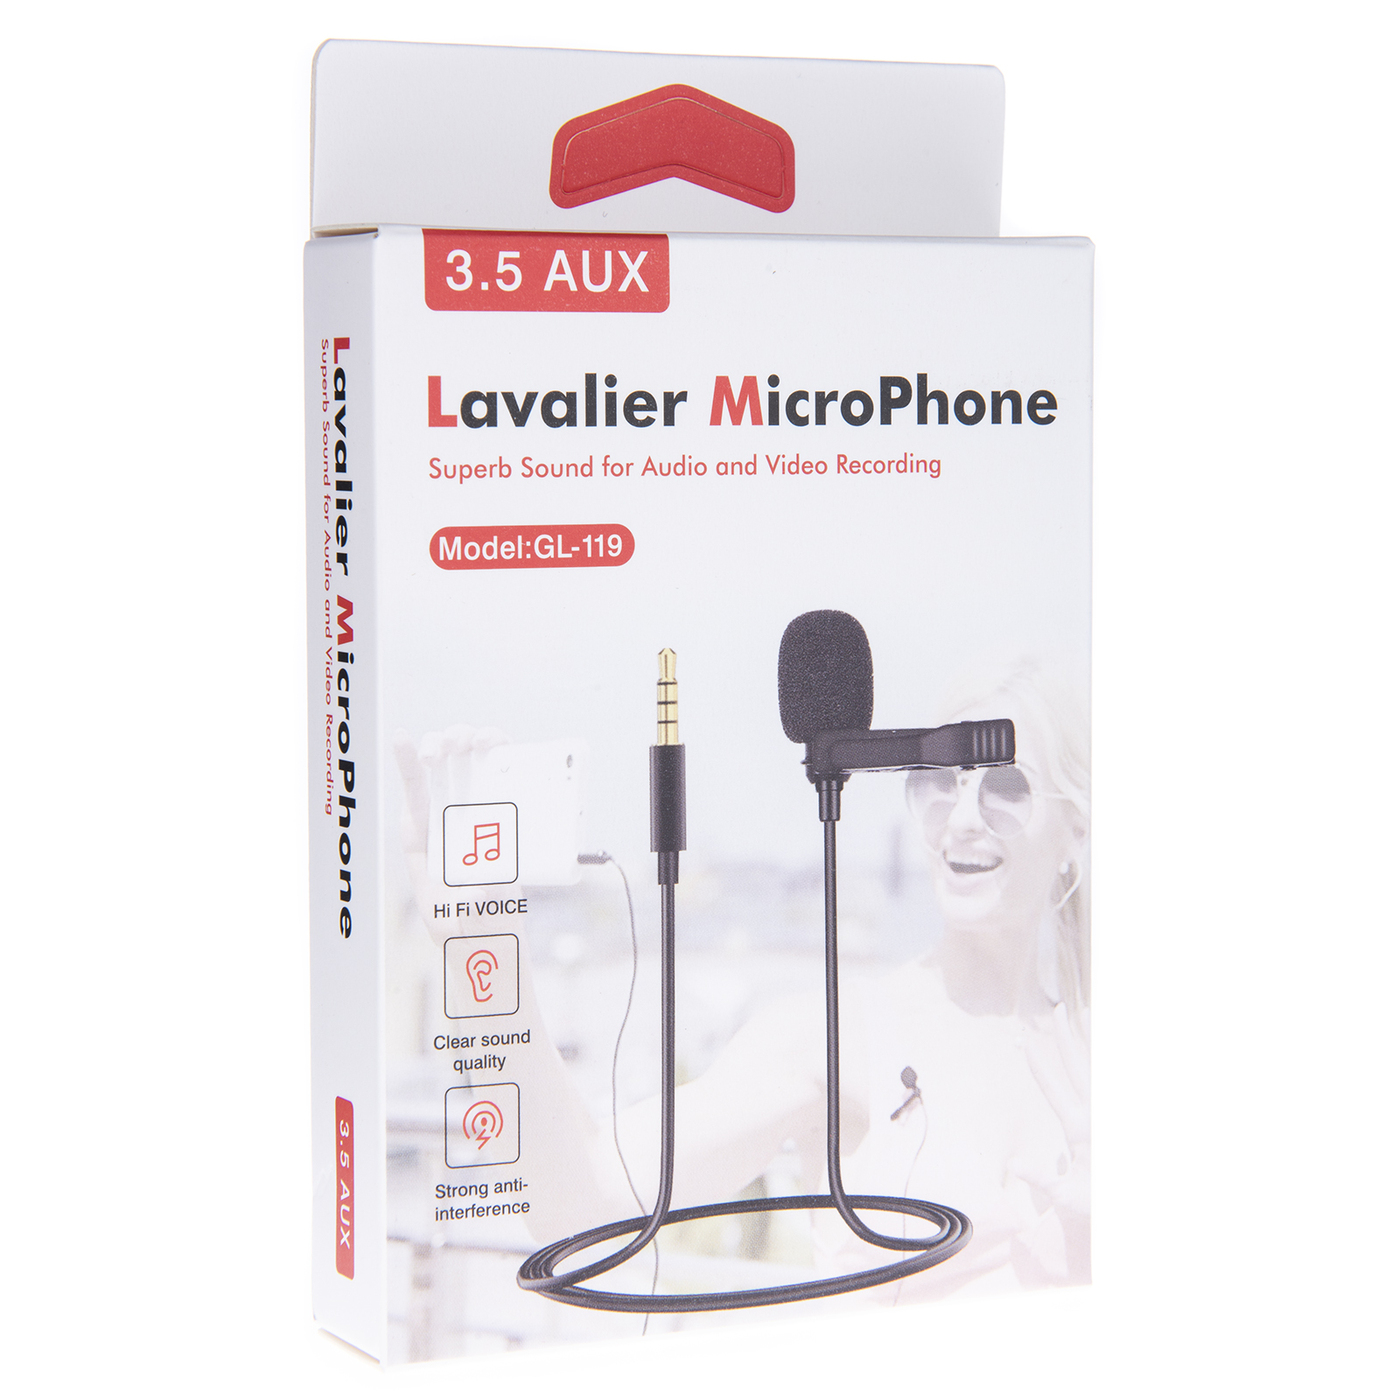 Петличный микрофон Lavalier MicroPhone 3.5AUX GL-119